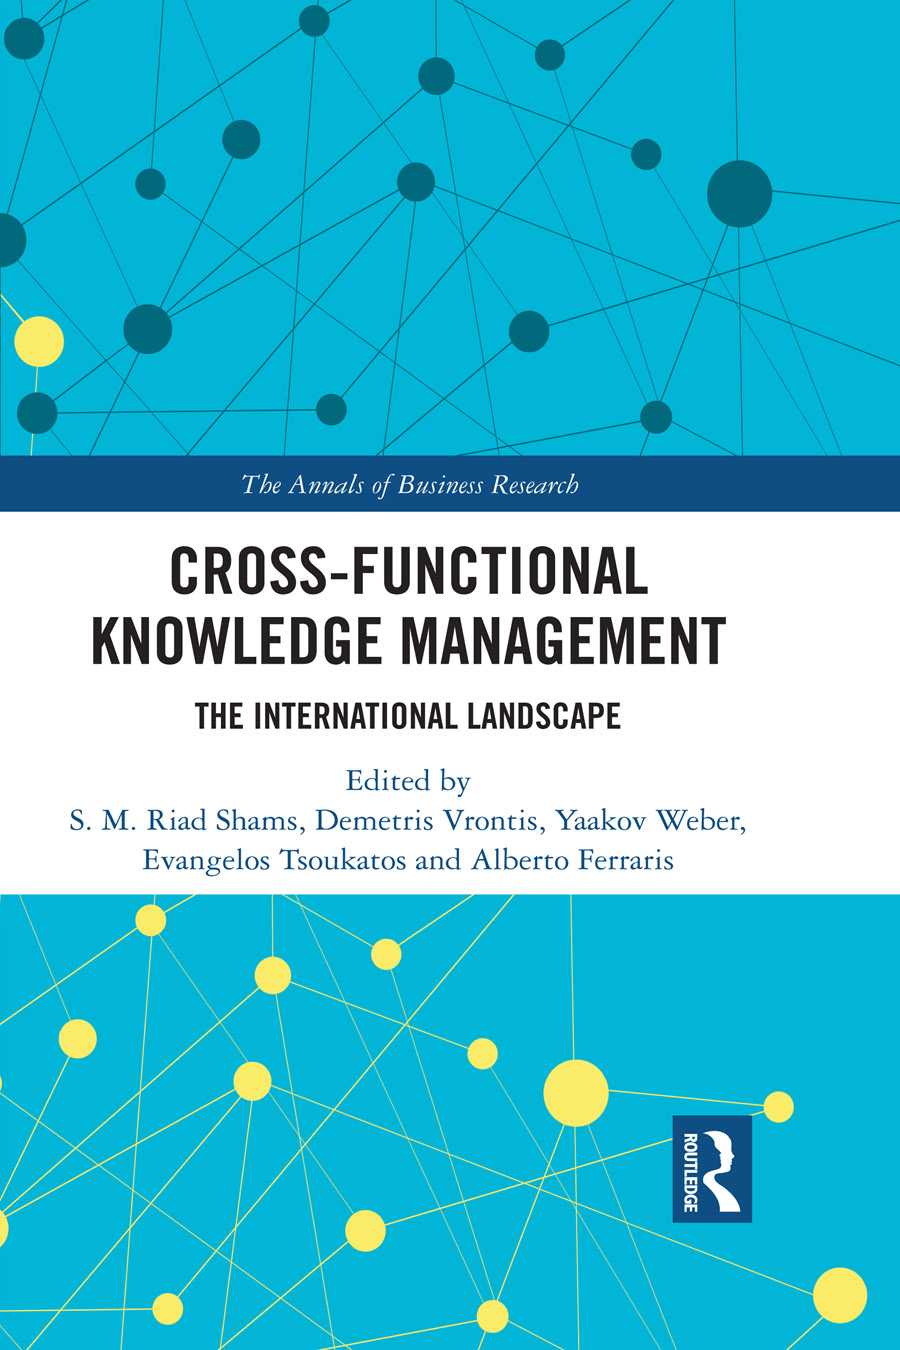 Cross-functional Knowledge Management: The International Landscape